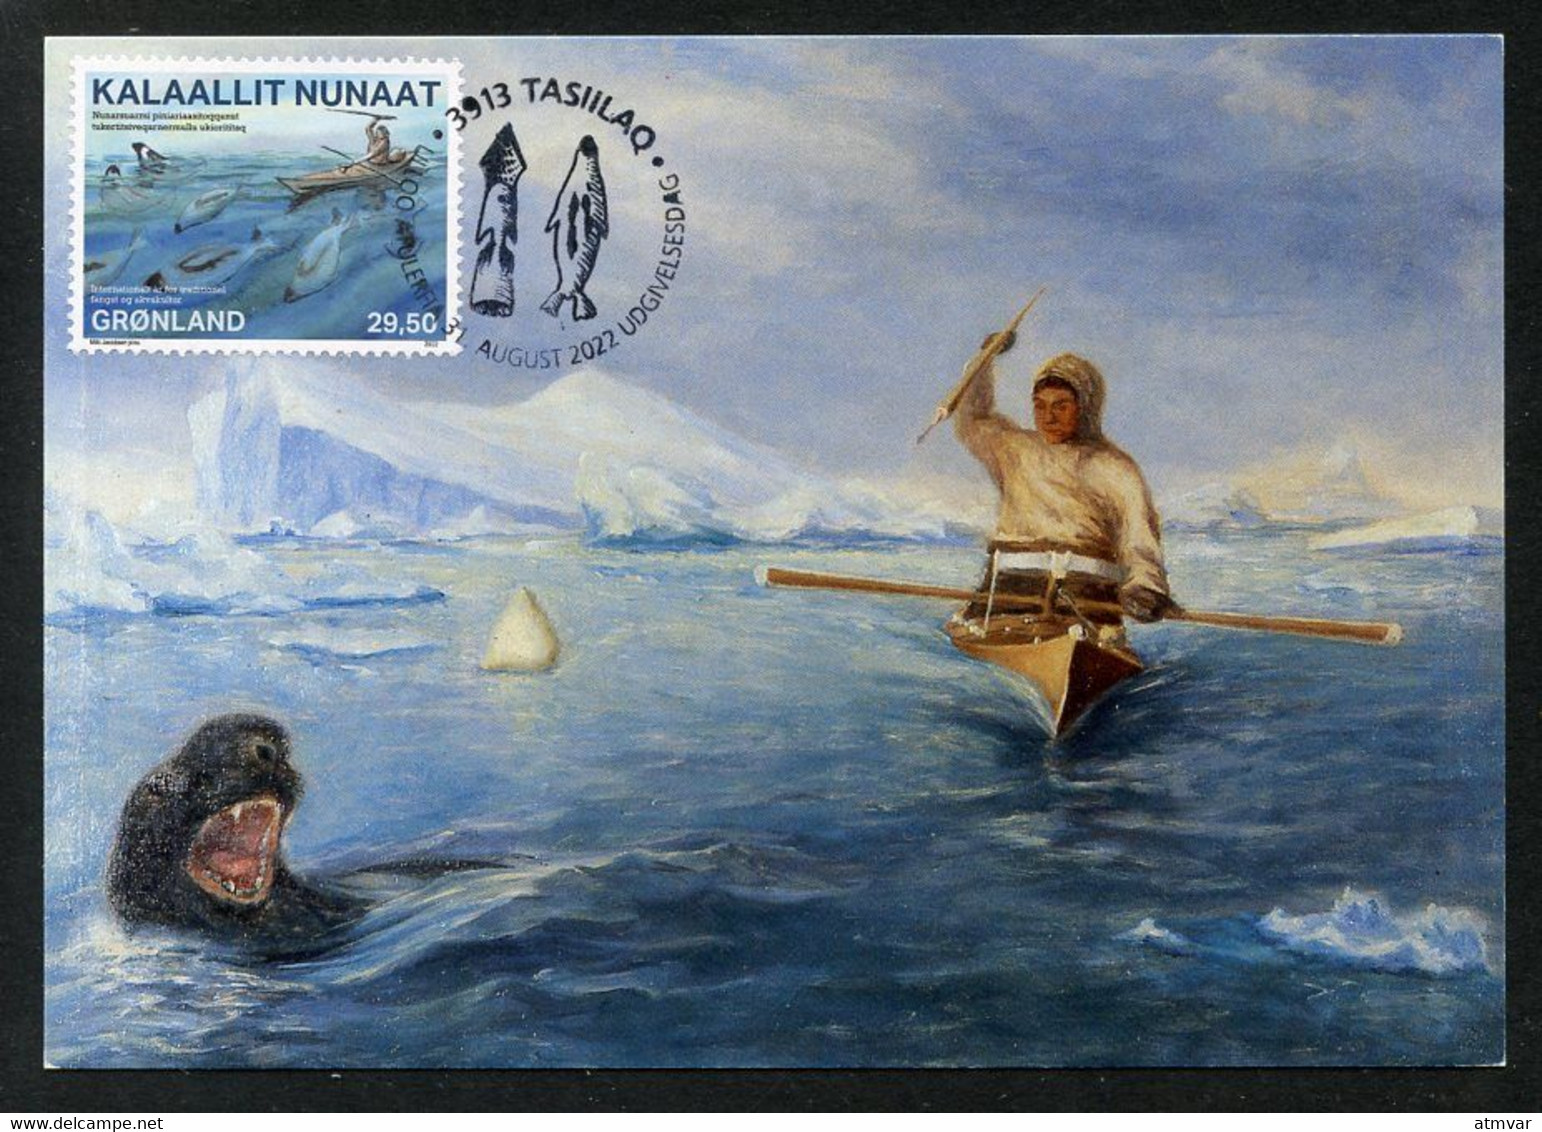 GREENLAND (2022) Carte Maximum Card - UN Year Artisanal Fisheries And Aquaculture, Chasse Phoques, Seal Hunting, Kayak - Maximum Cards